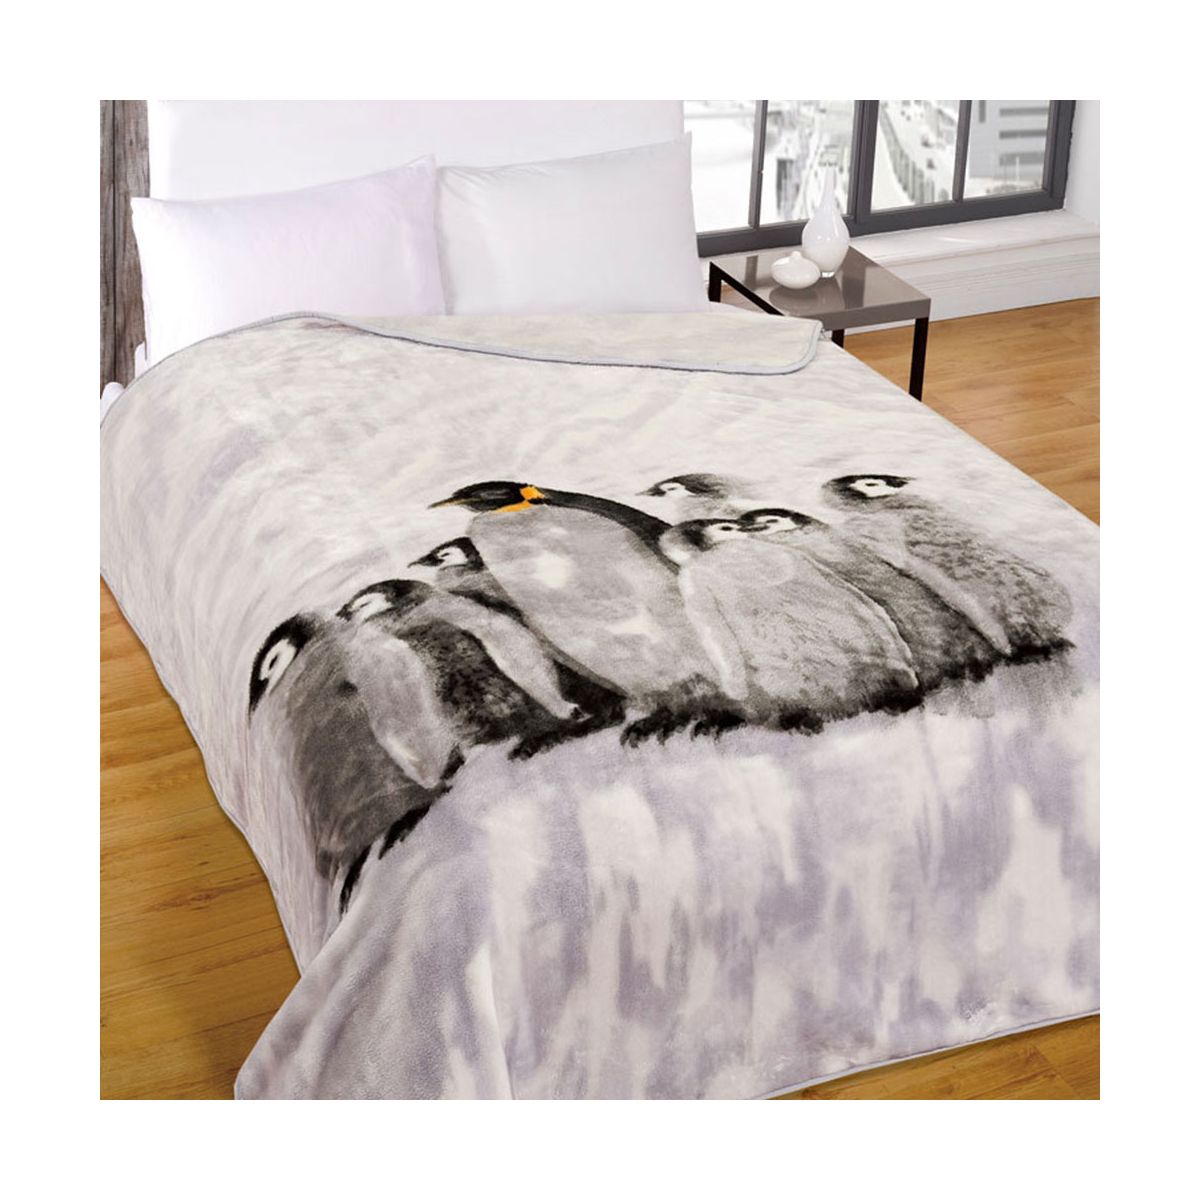 Dreamscene Faux Fur Mink Throw - Penguin Family - 150x200cm